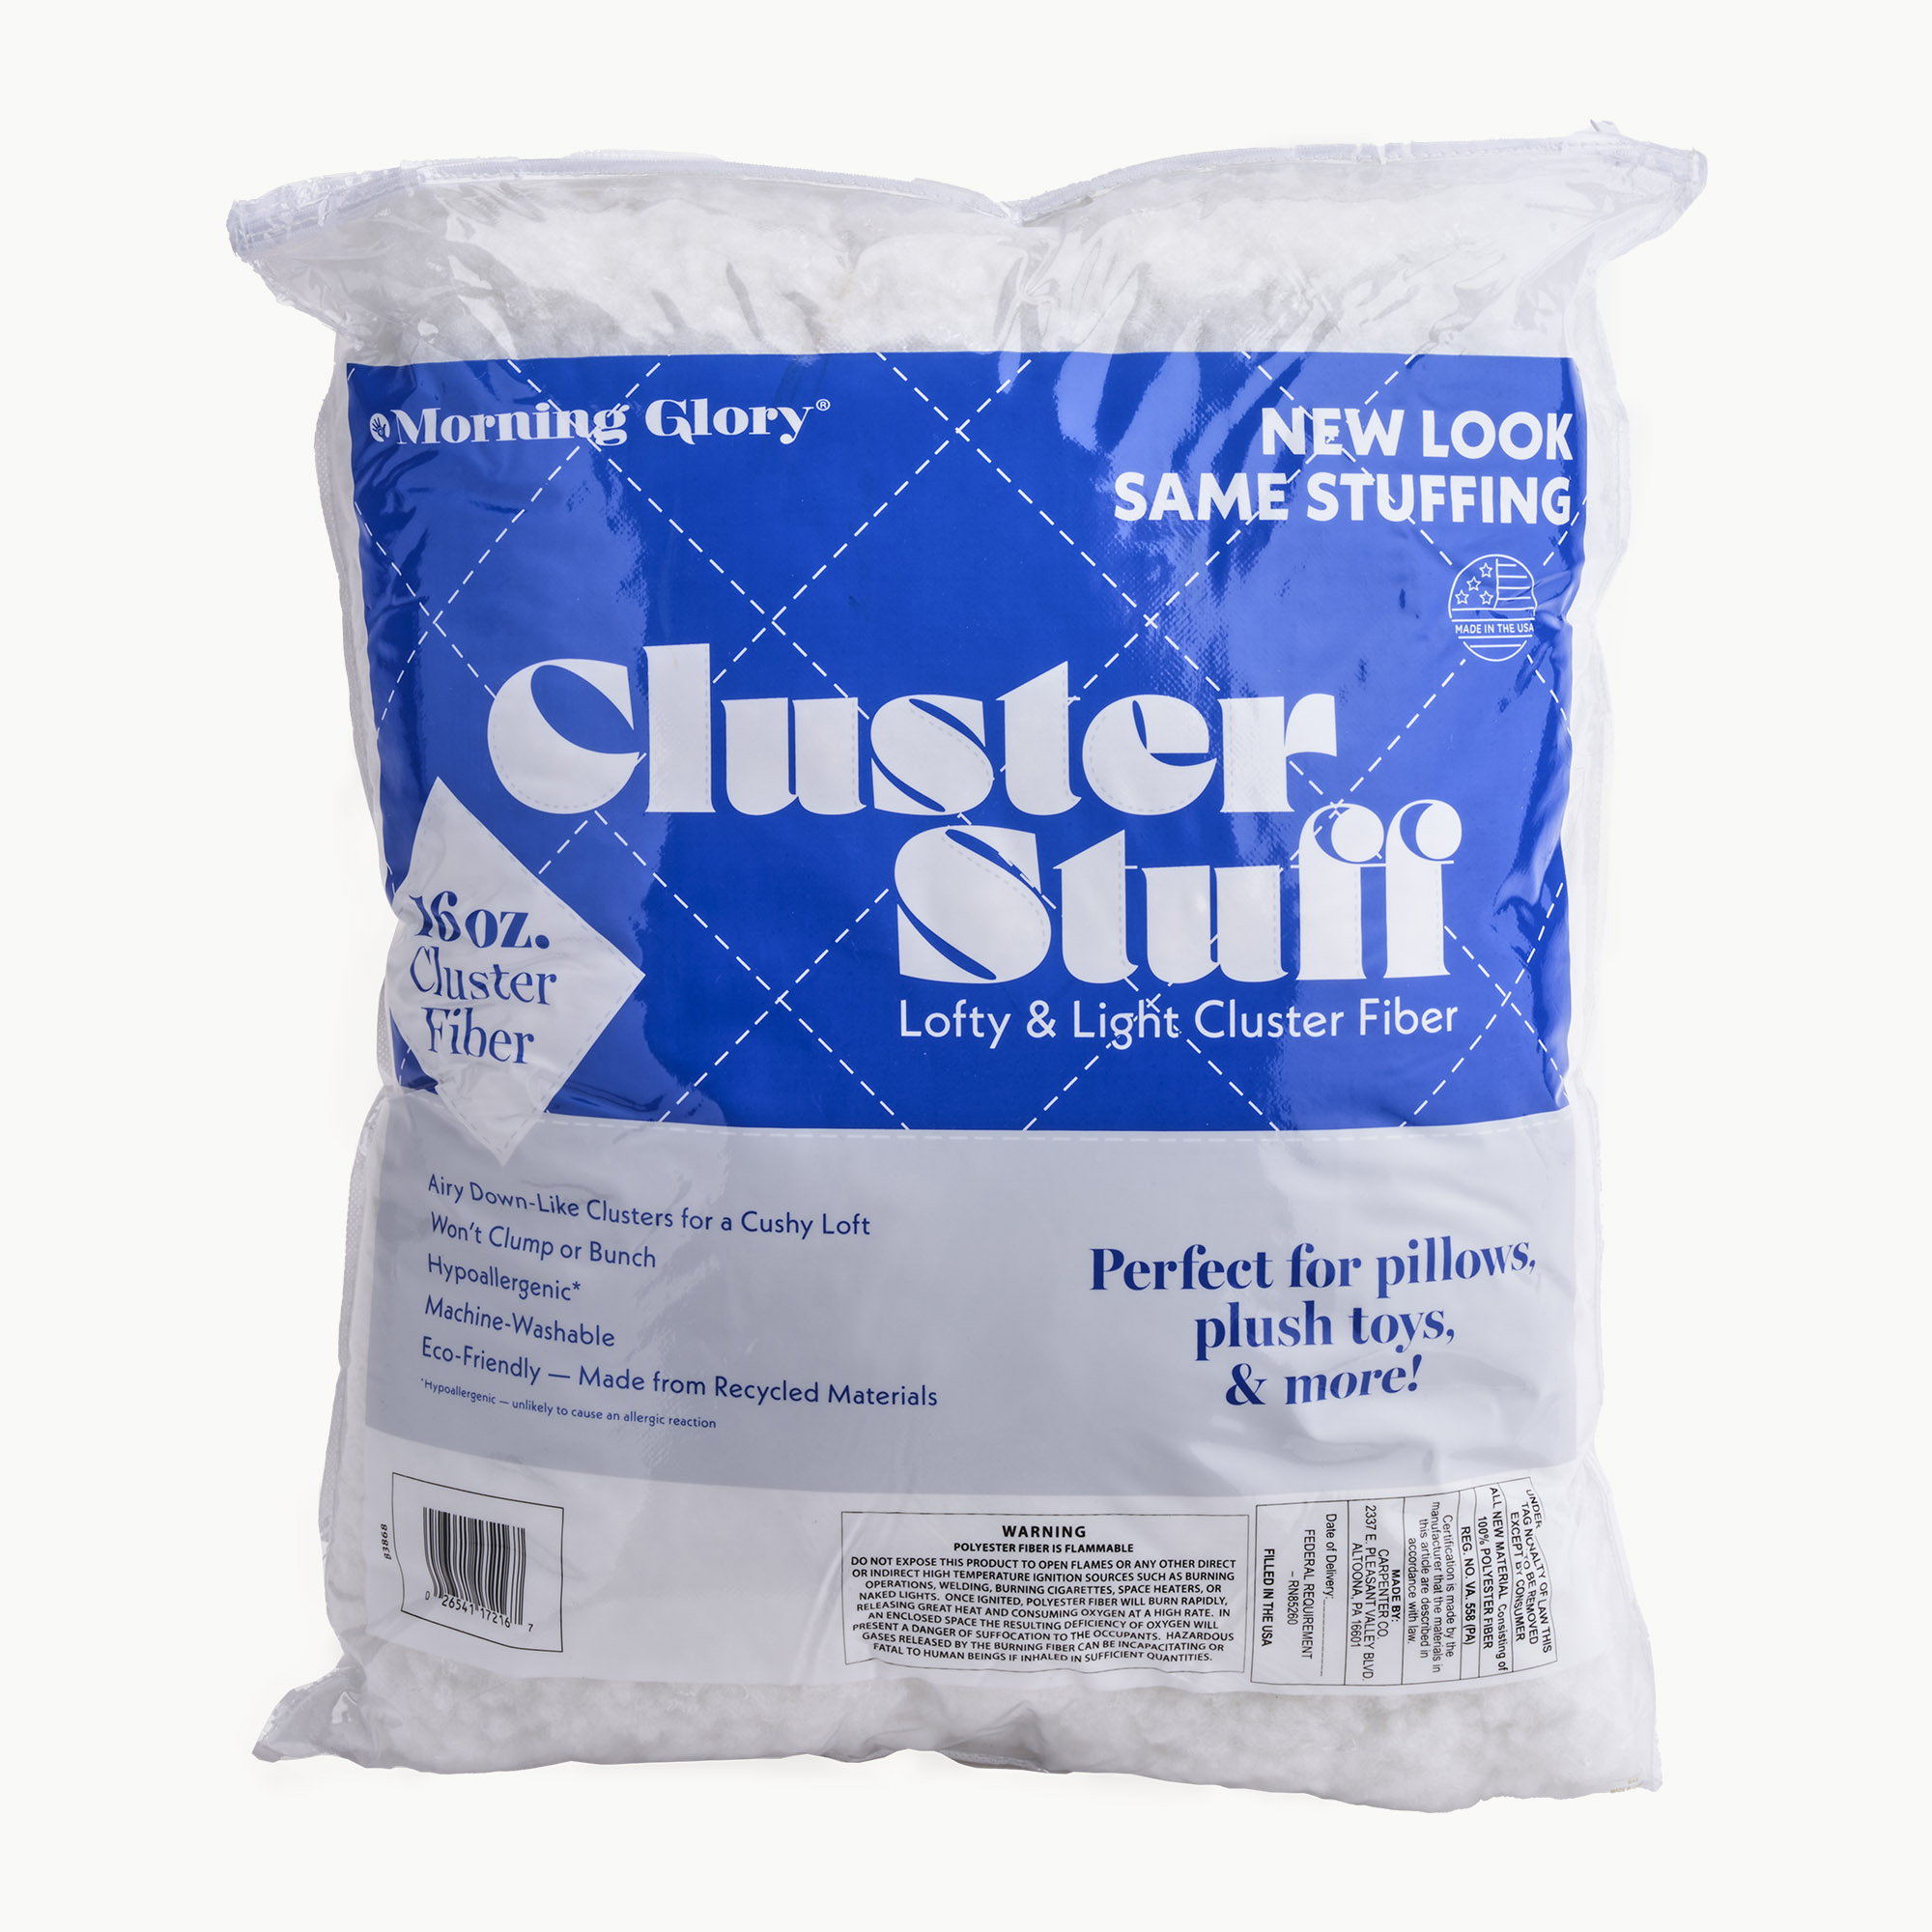 Morning Glory Cluster Stuff Polyester Fiber - 16 Oz. - image 1 of 6